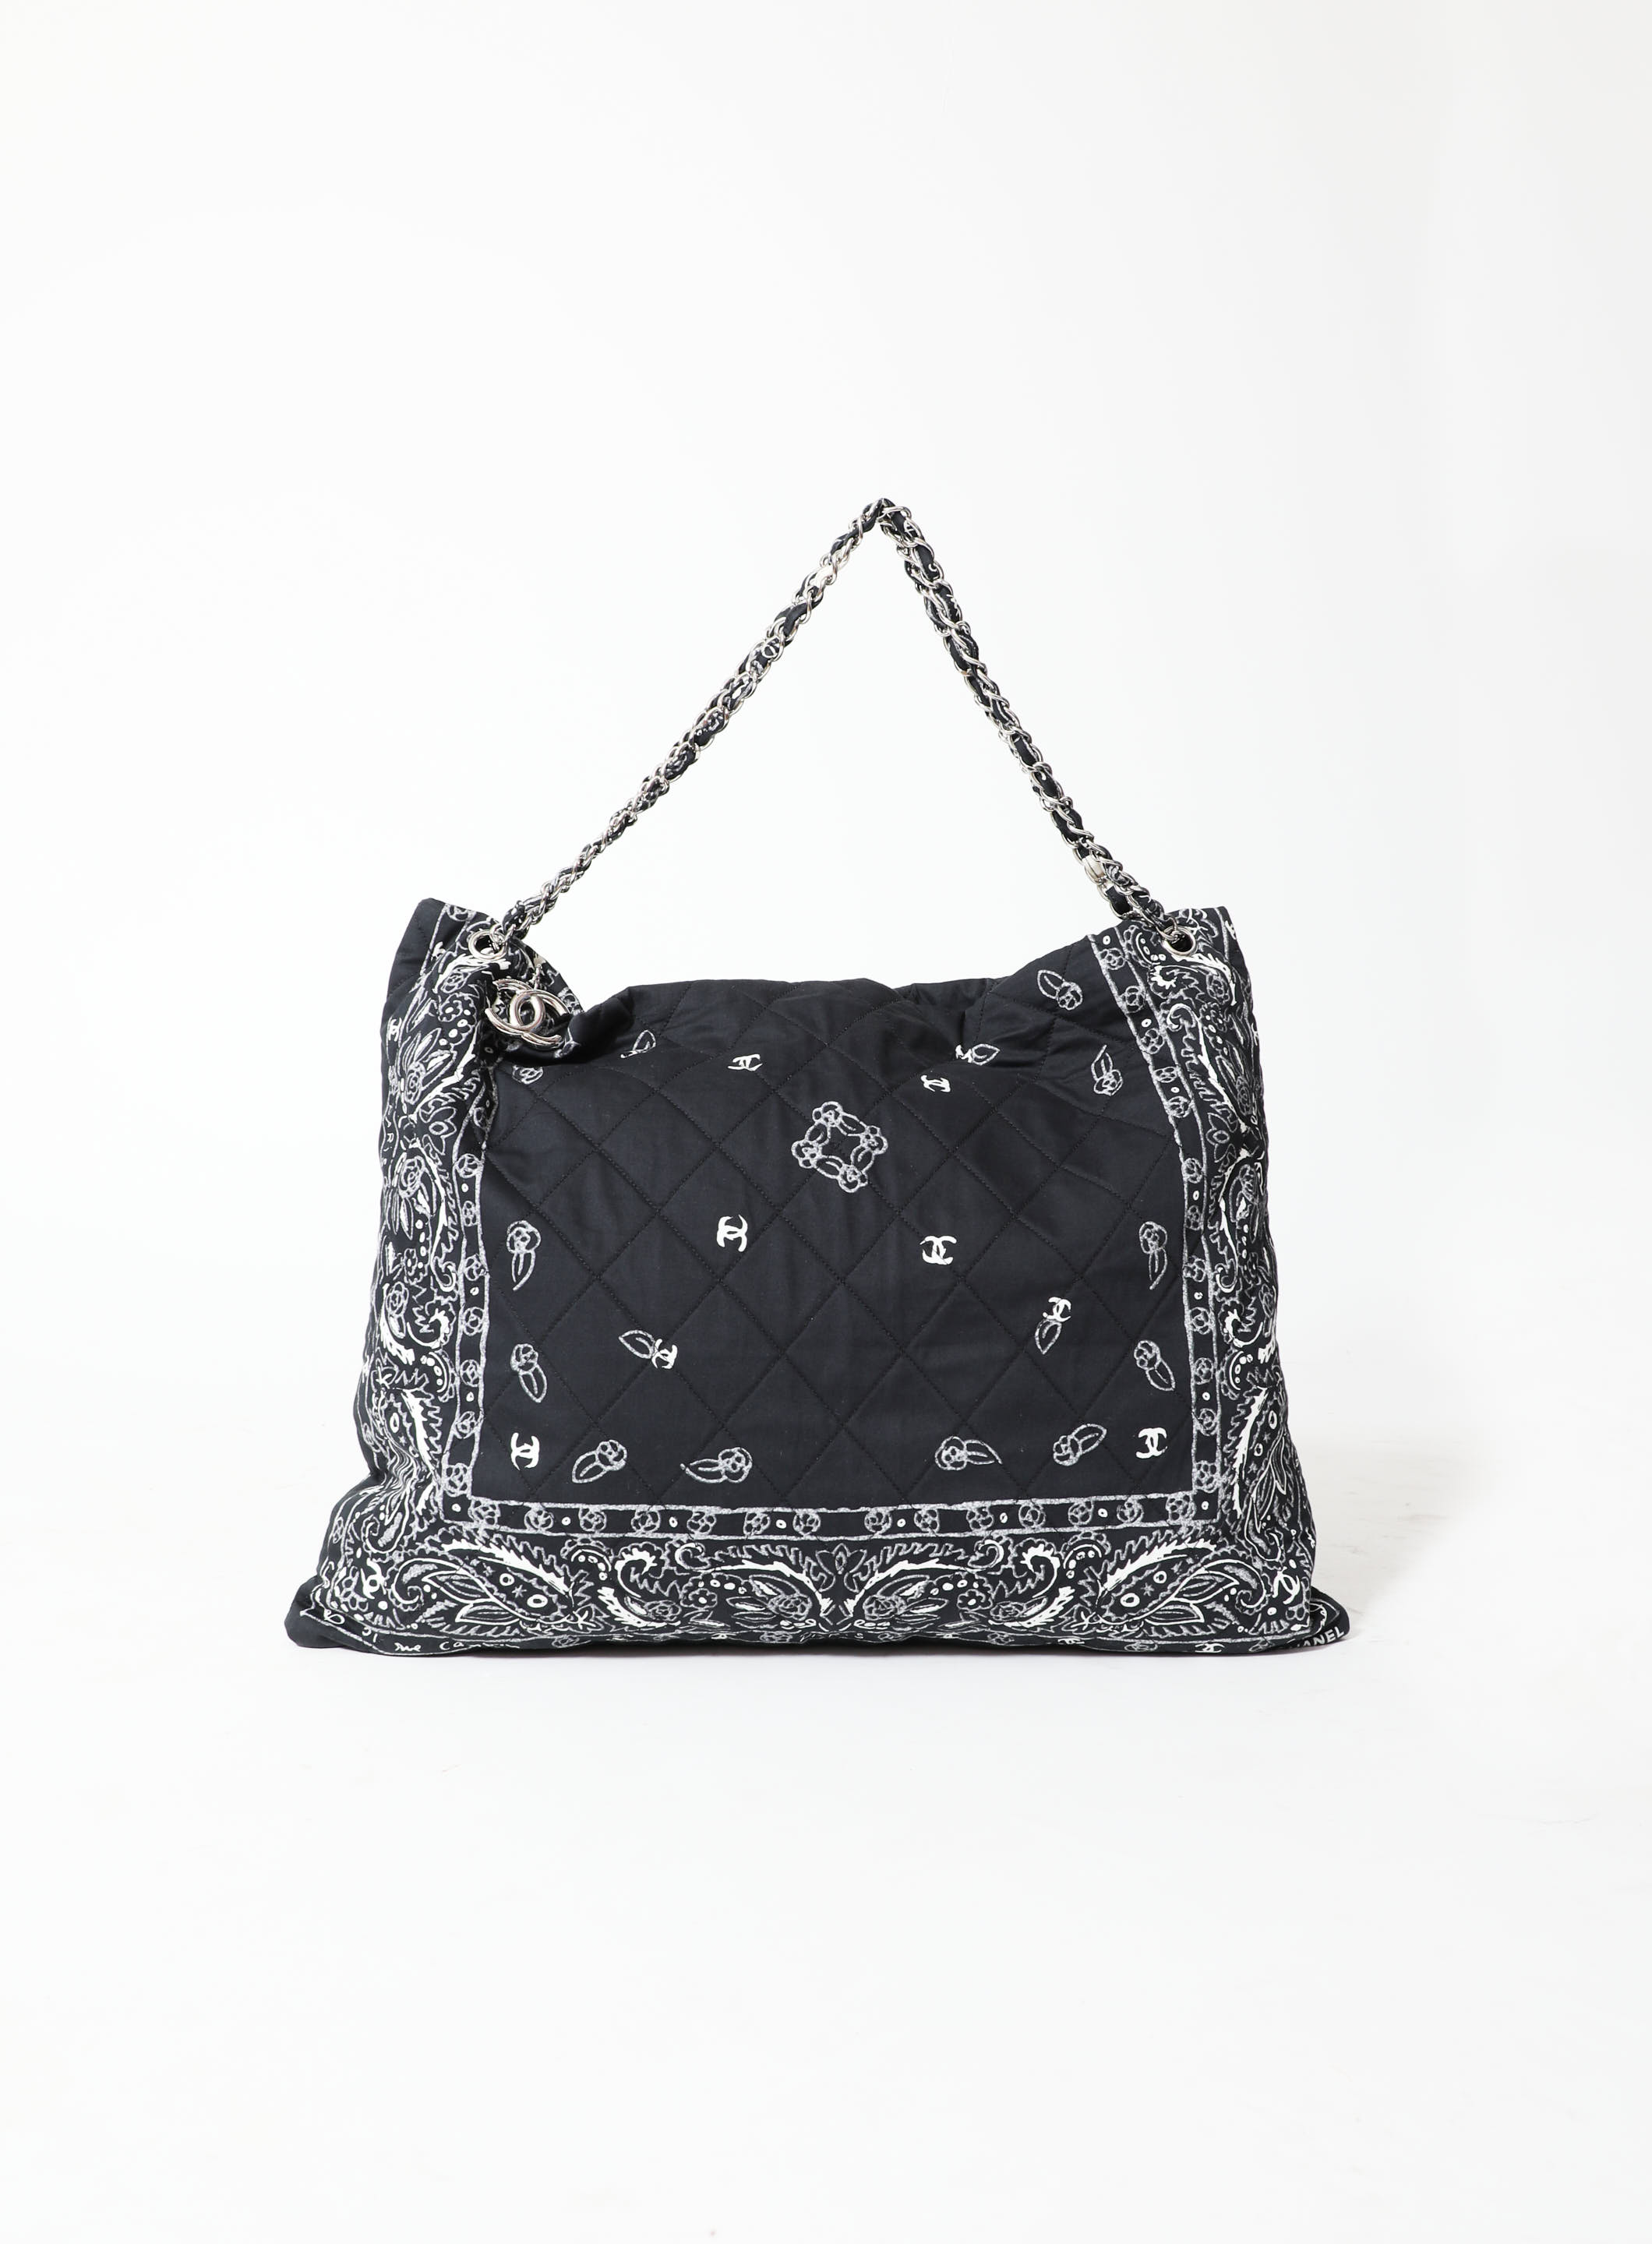 Chanel Bandana Flap Bag Quilted Canvas Medium